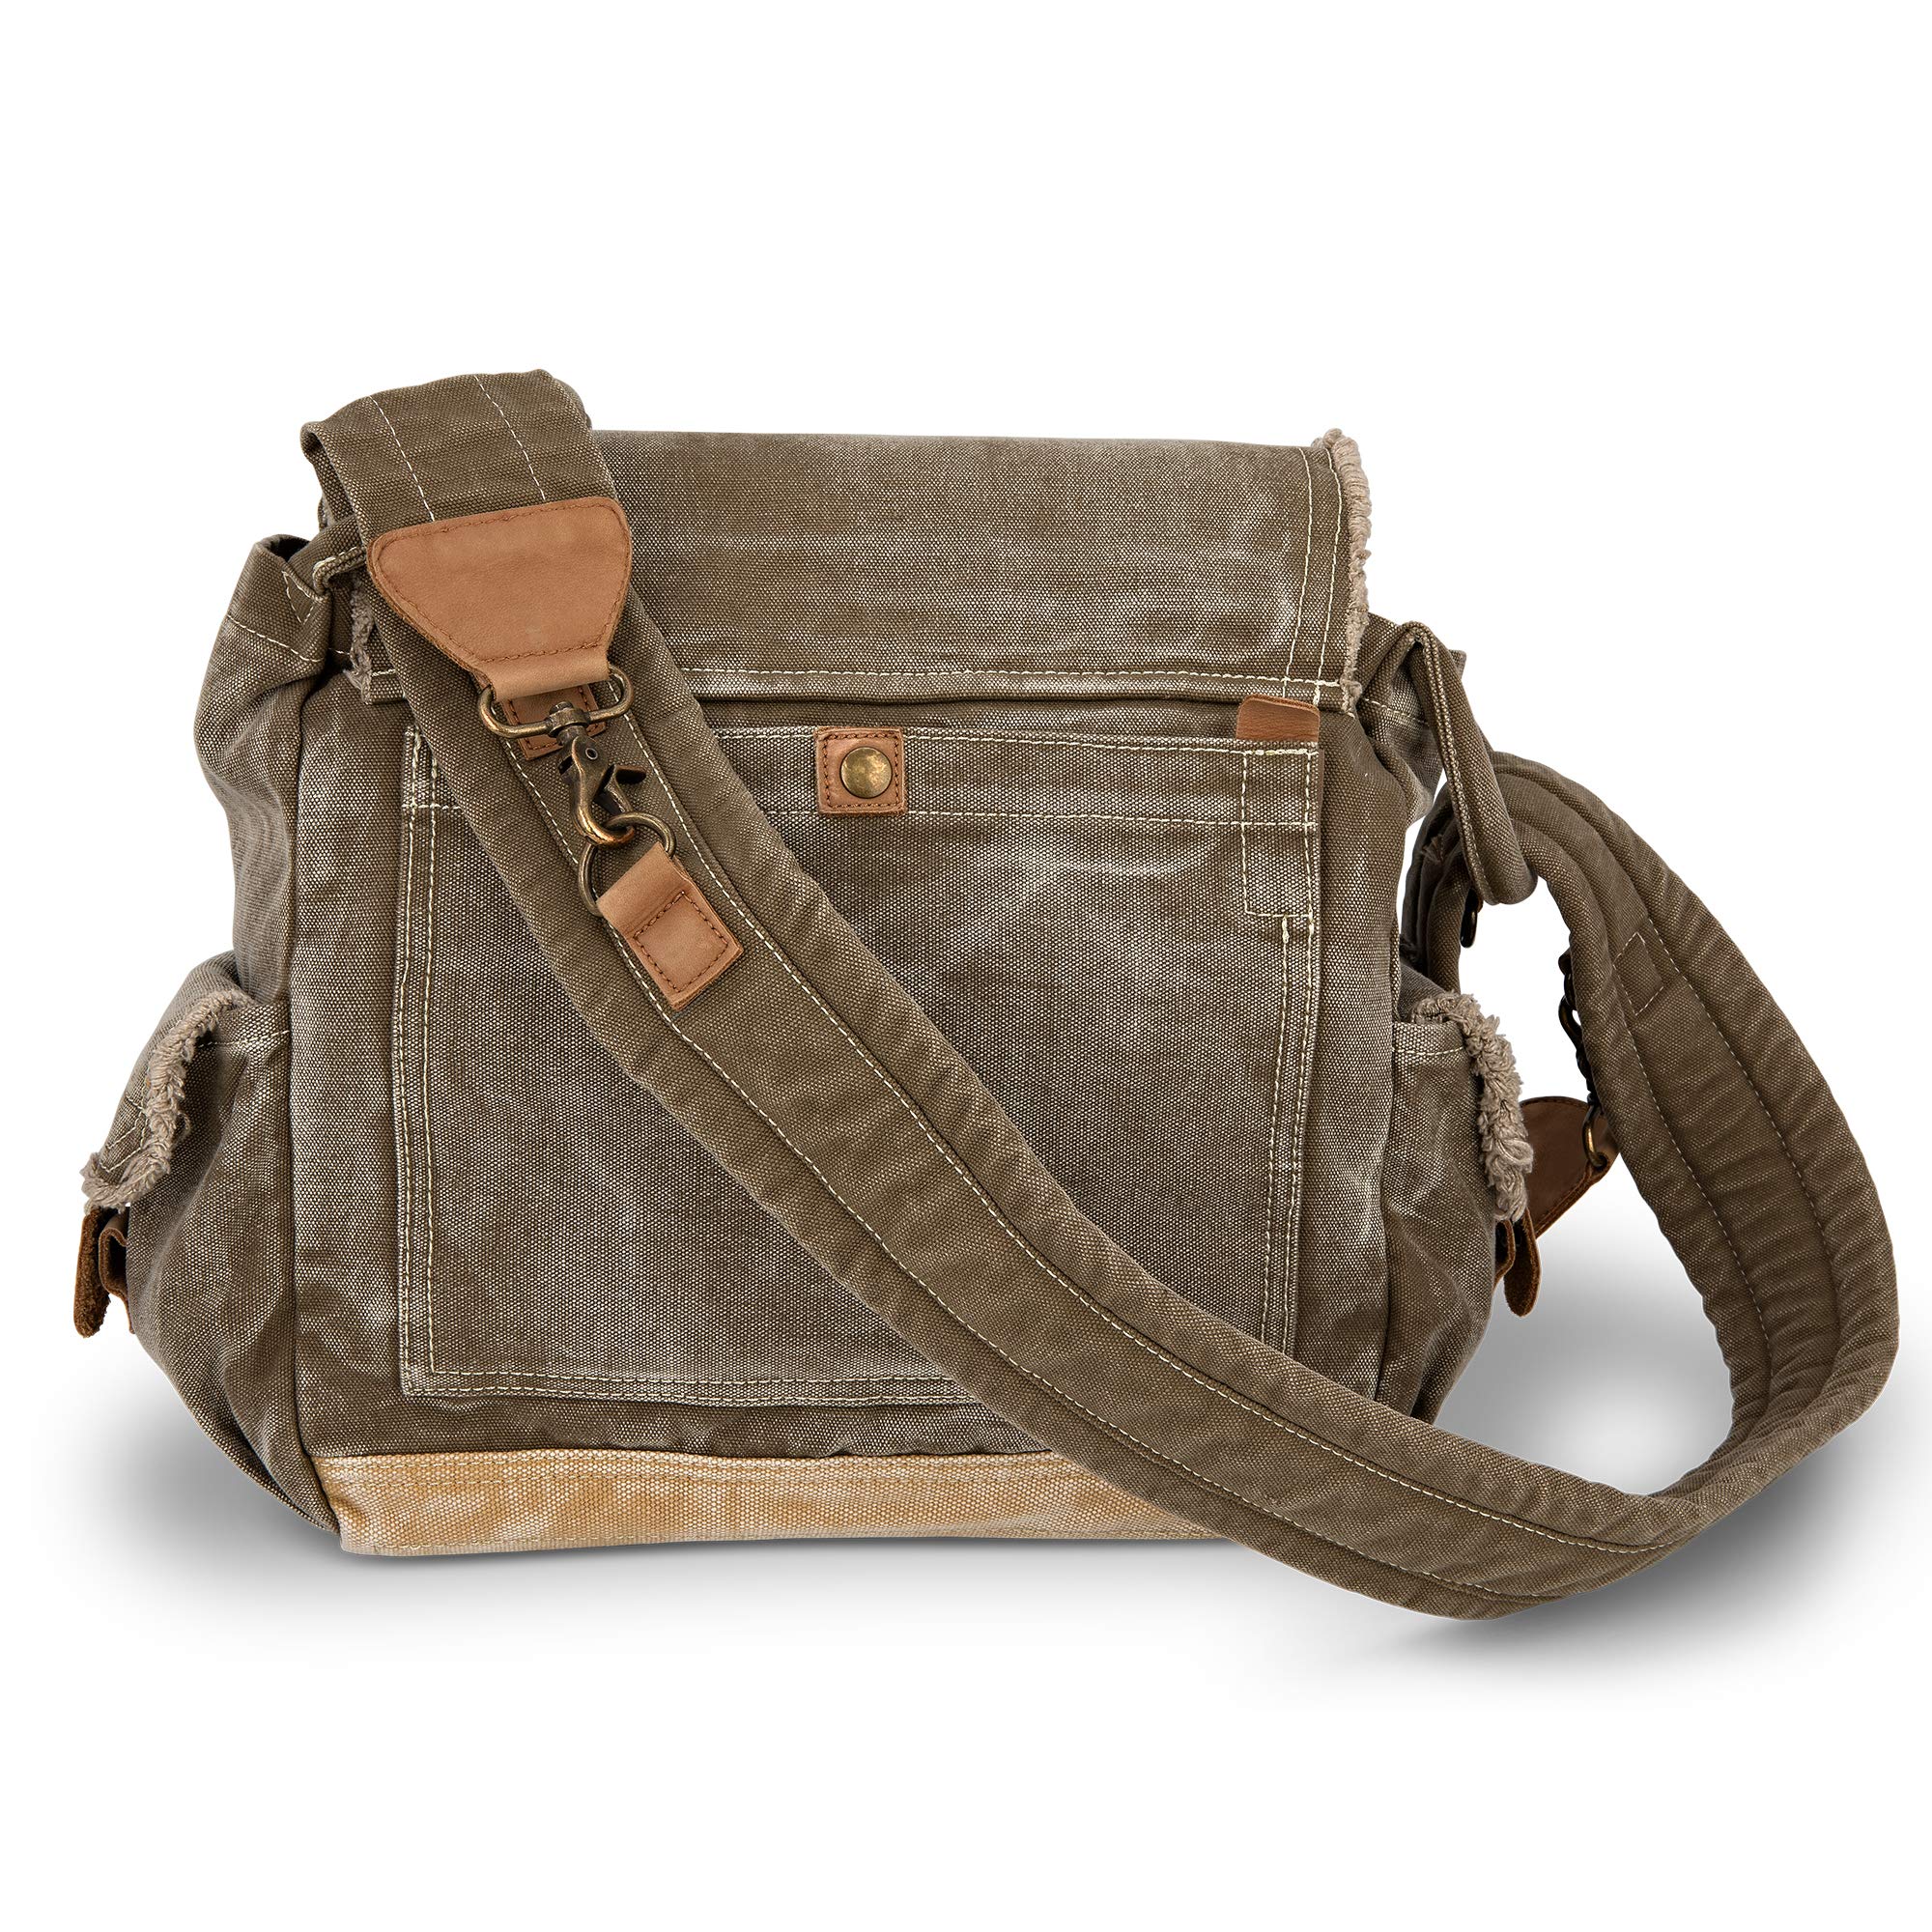 SCRUFFY DOG Vintage Messenger Bag - Shoulder Bags for Men & Women - Durable  Canvas Tote - Laptop & Travel Crossbody Satchel - Rustic Military Style